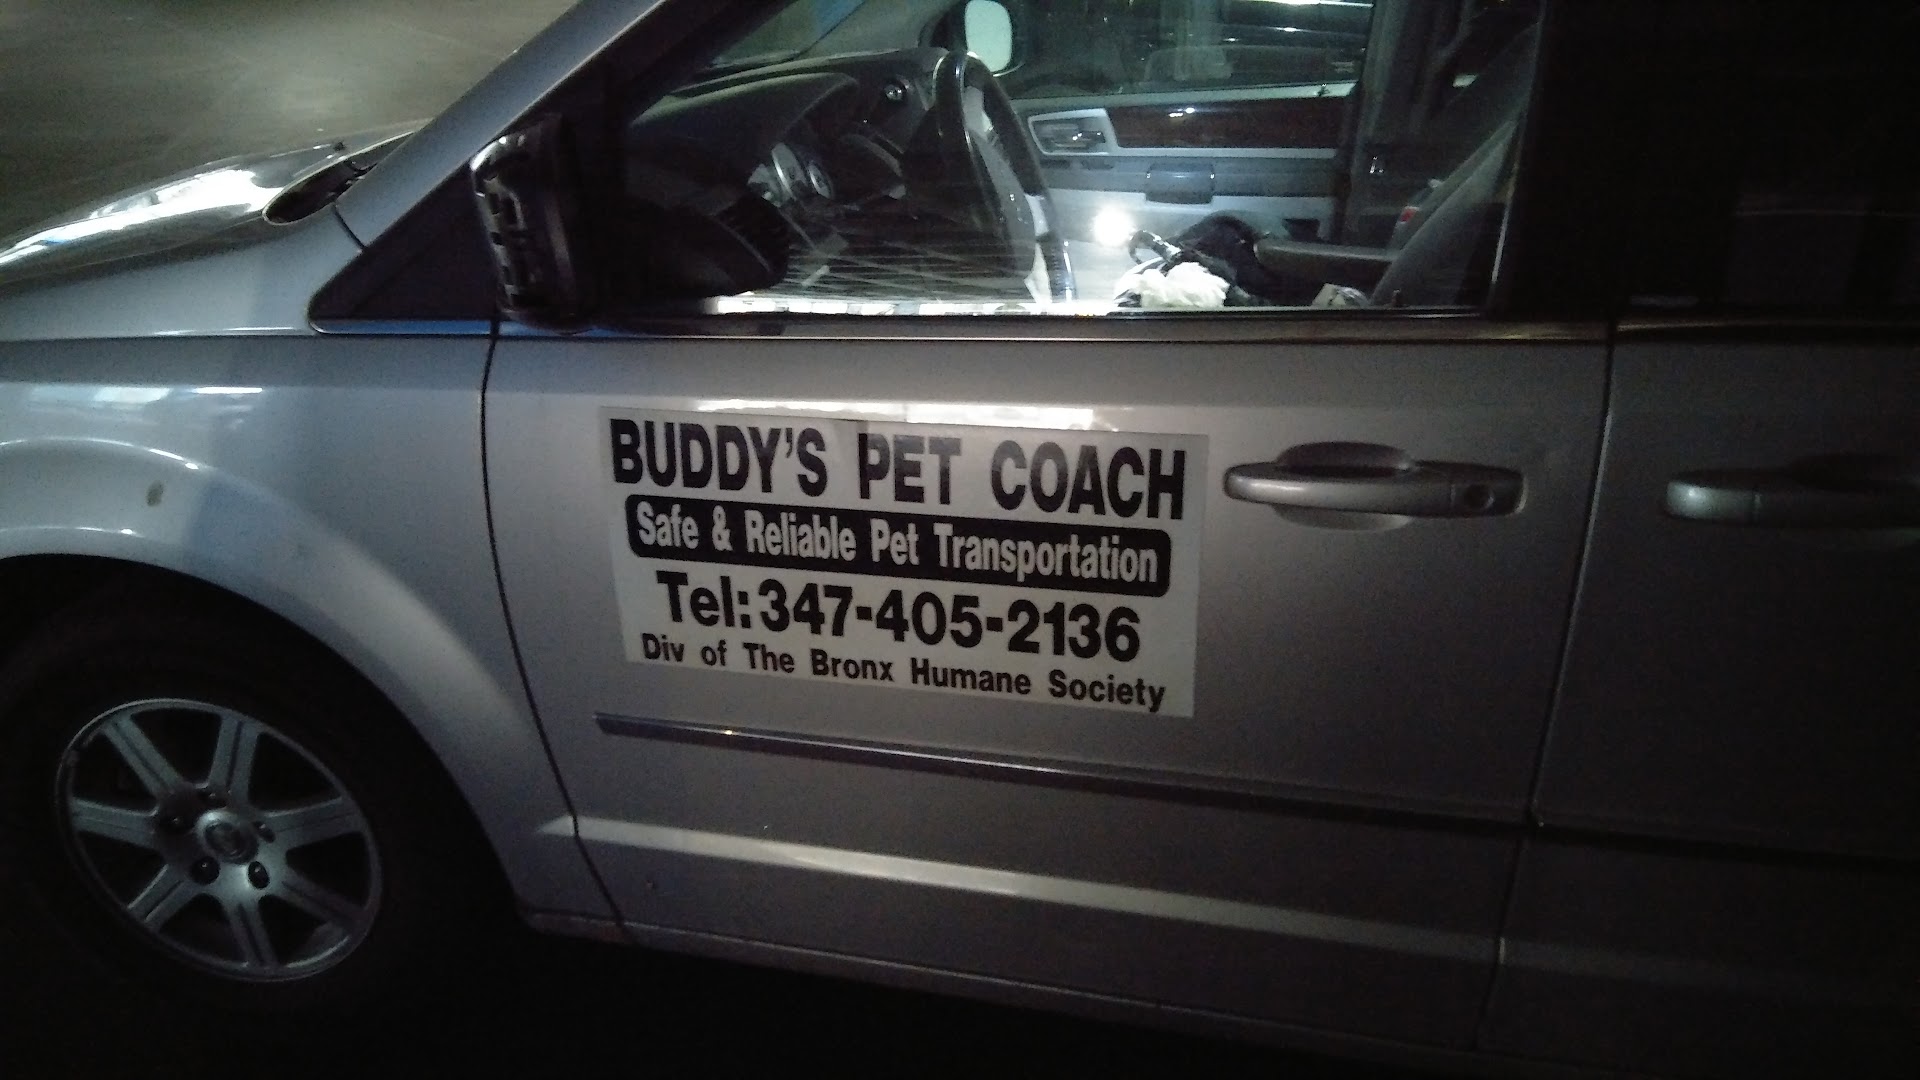 Buddy's Pet coach